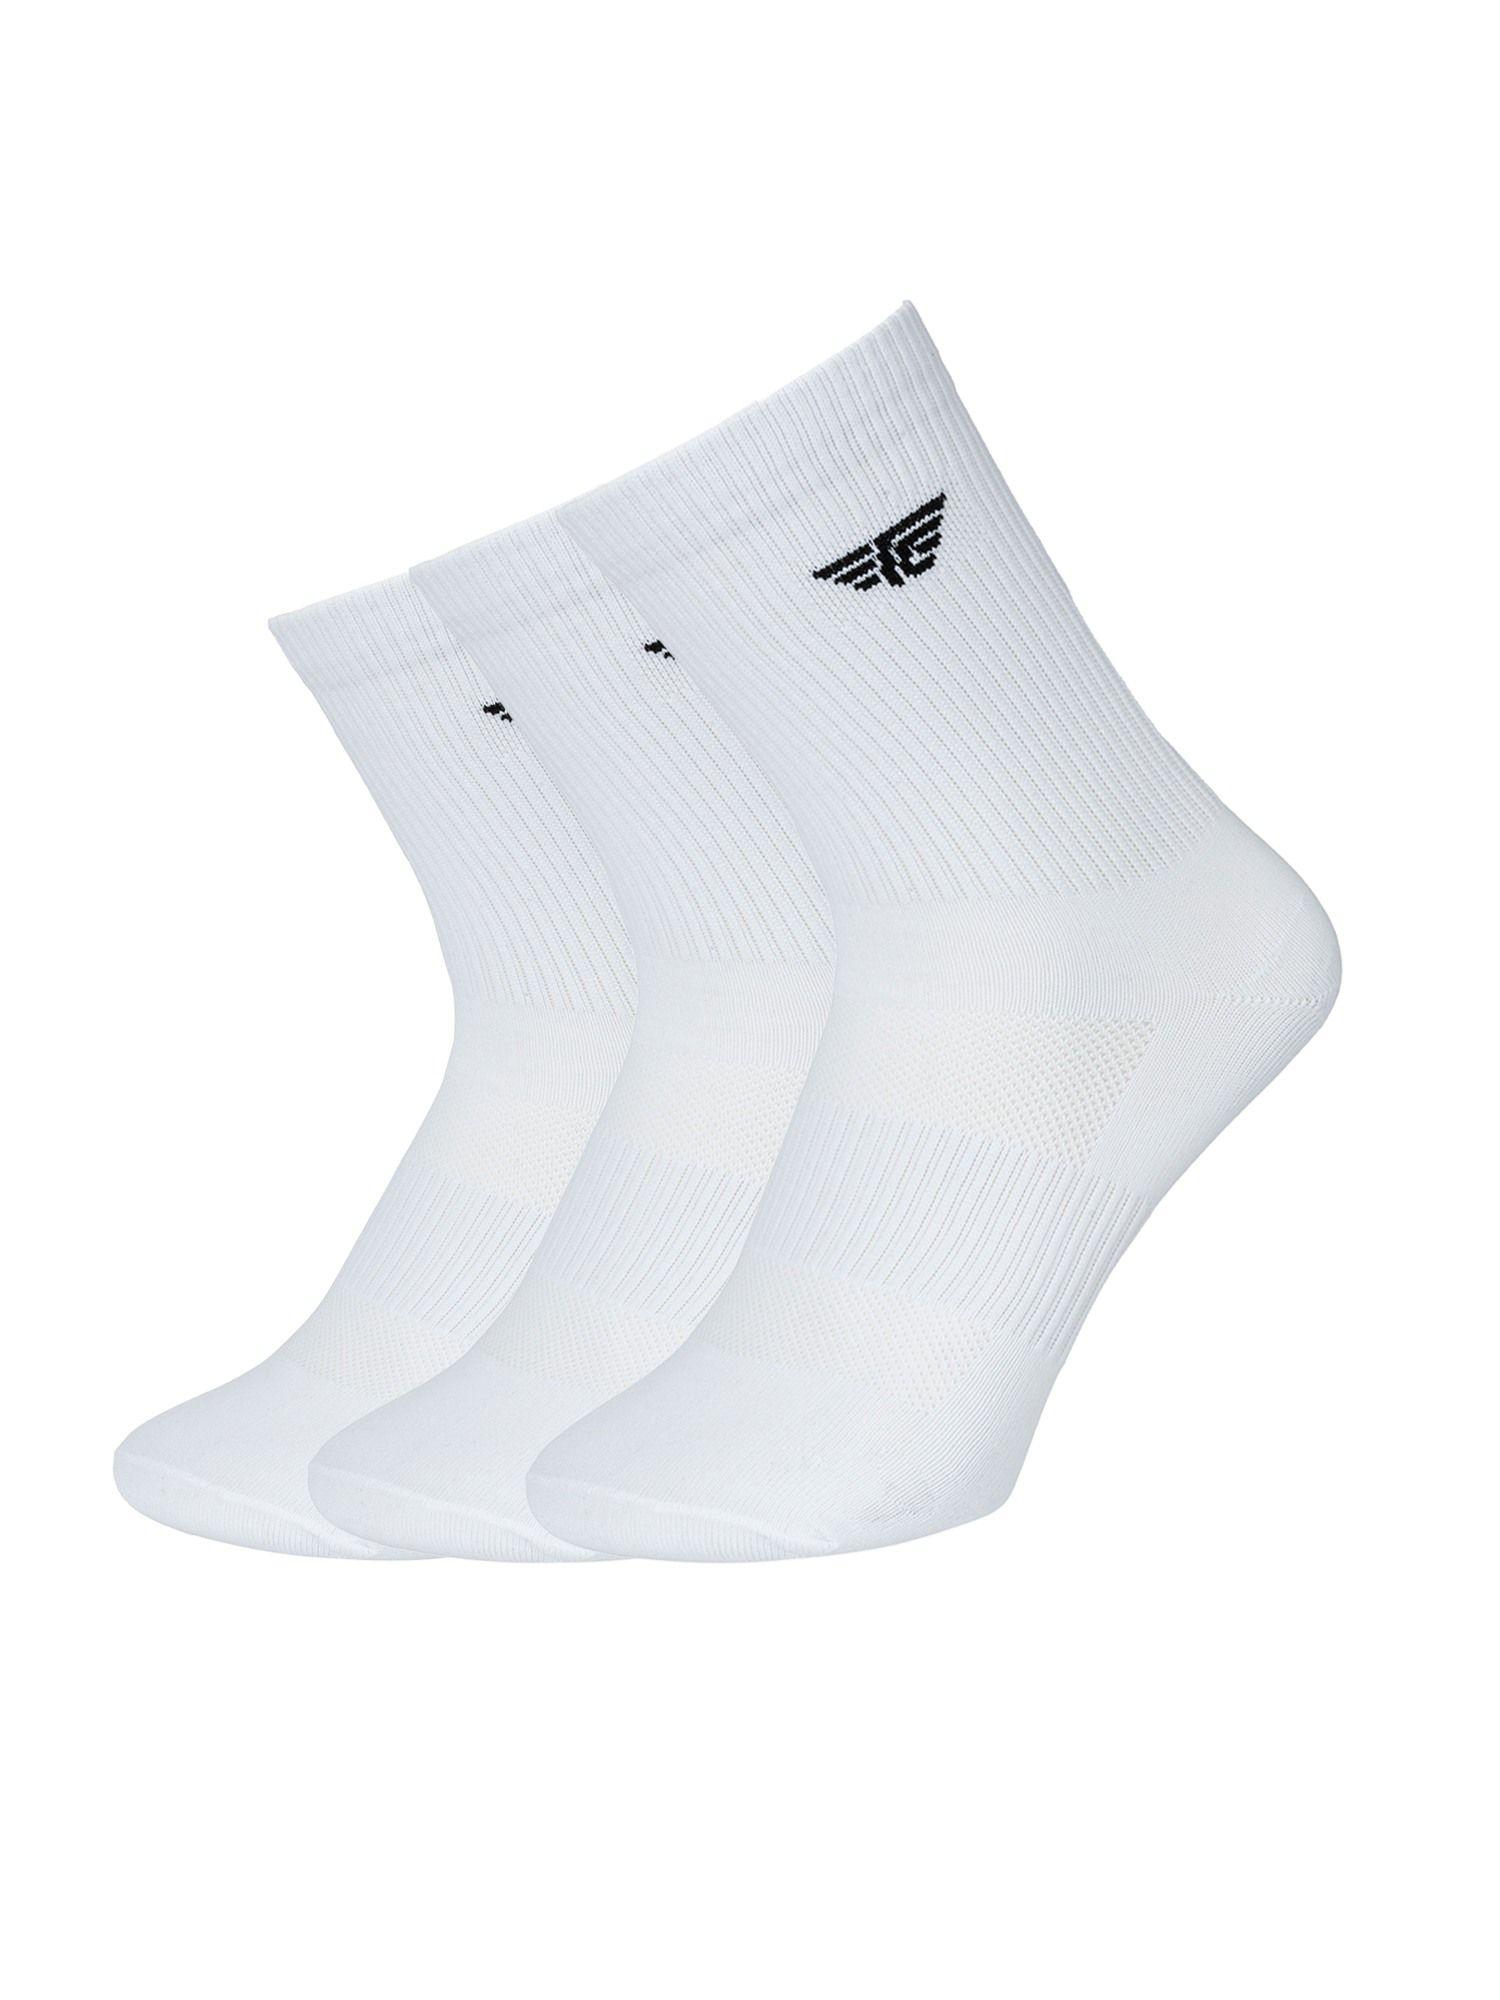 men-white-solid-above-ankle-socks-(pack-of-3)